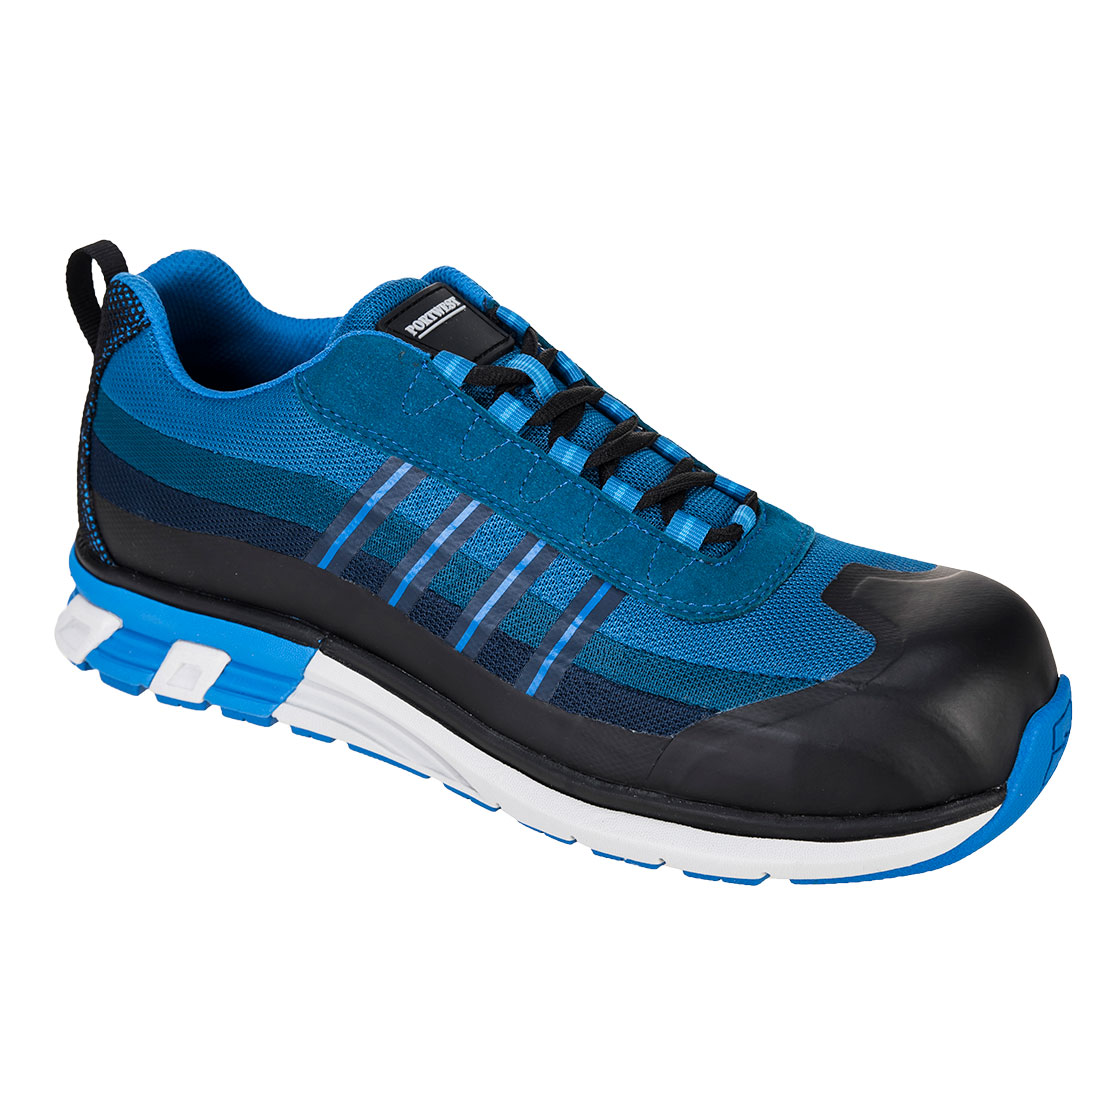 Portwest OlymFlex London S1P SRA Trainer munkavédelmi cipő, kék/fekete